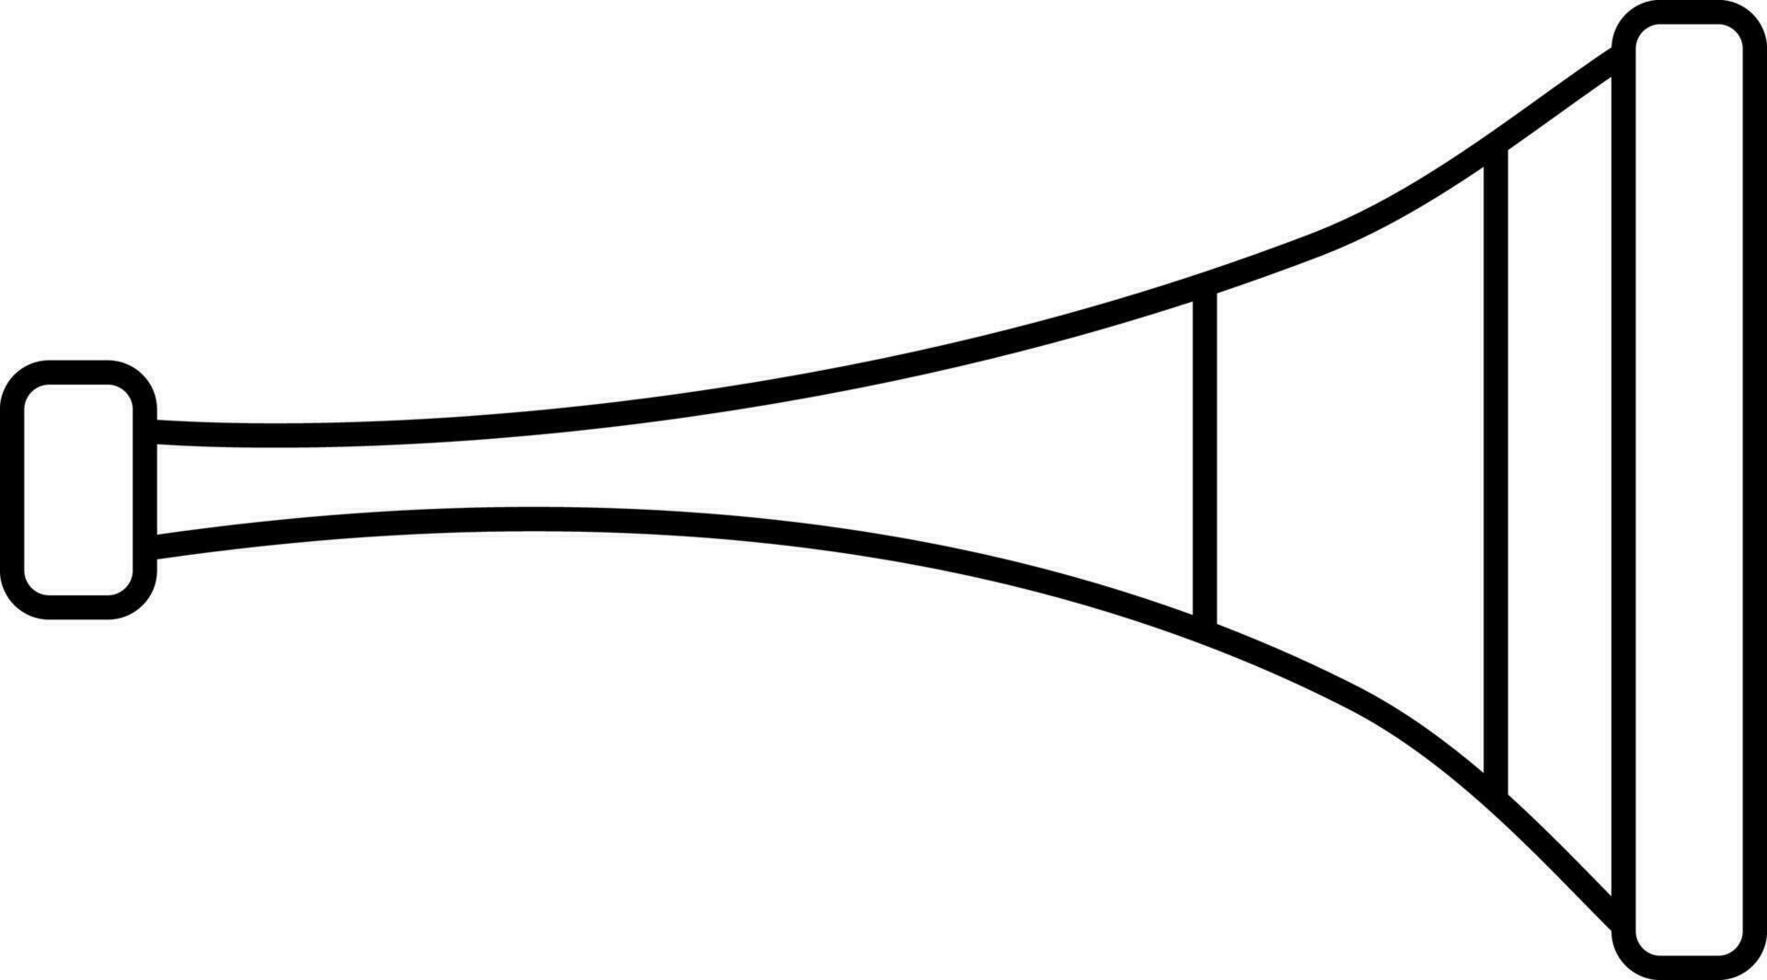 Black Line Art Vuvuzela Or Horn Icon In Flat Style. vector